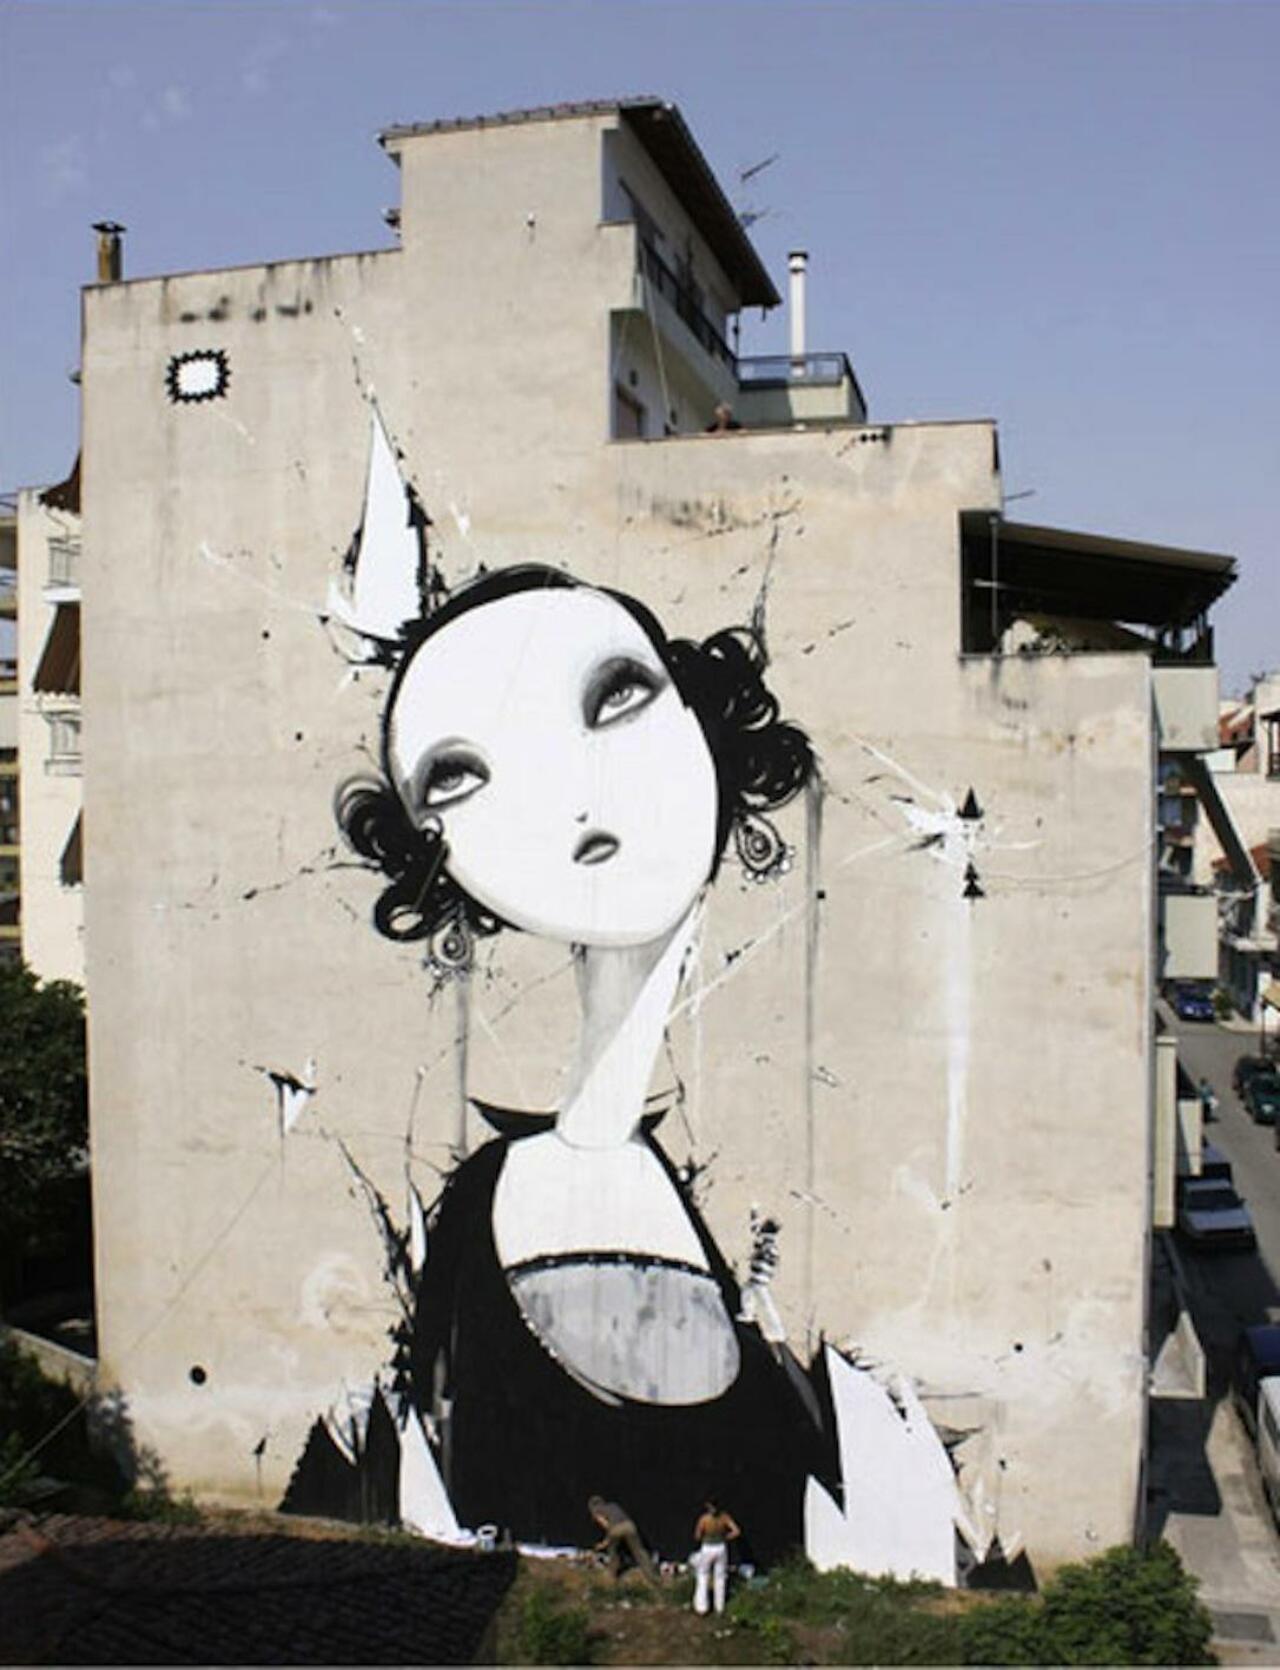 RT @Brindille_: #Streetart #urbanart #graffiti #mural #peinture #acrylique de l'artiste Alexsandros Vasmoulakis, Athènes, Grèce http://t.co/xmPeEGMoFp